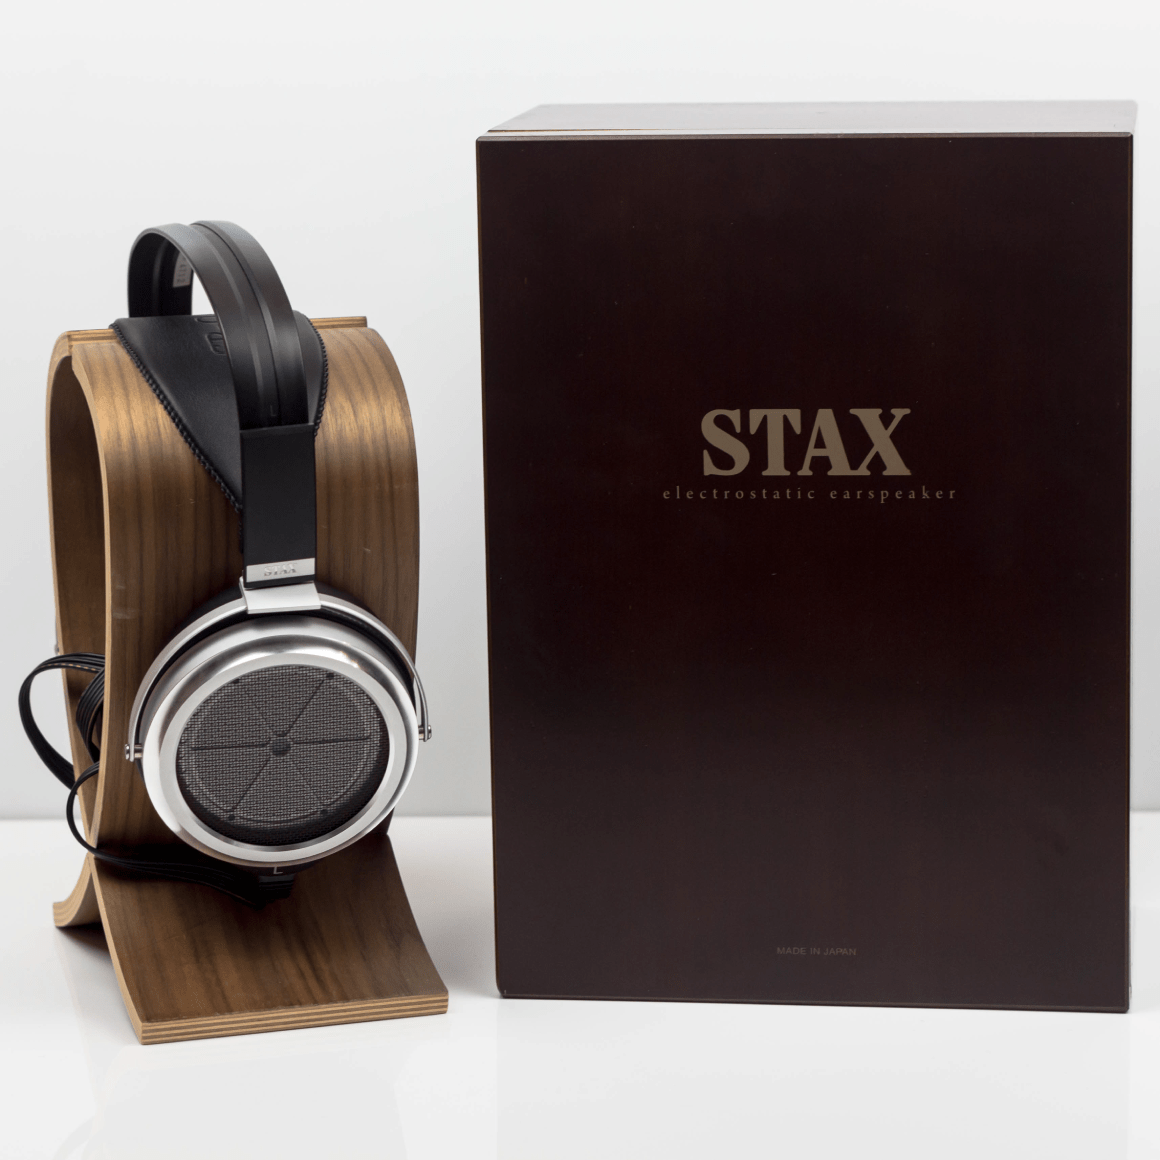 STAX - SR-009 (Demo Unit)